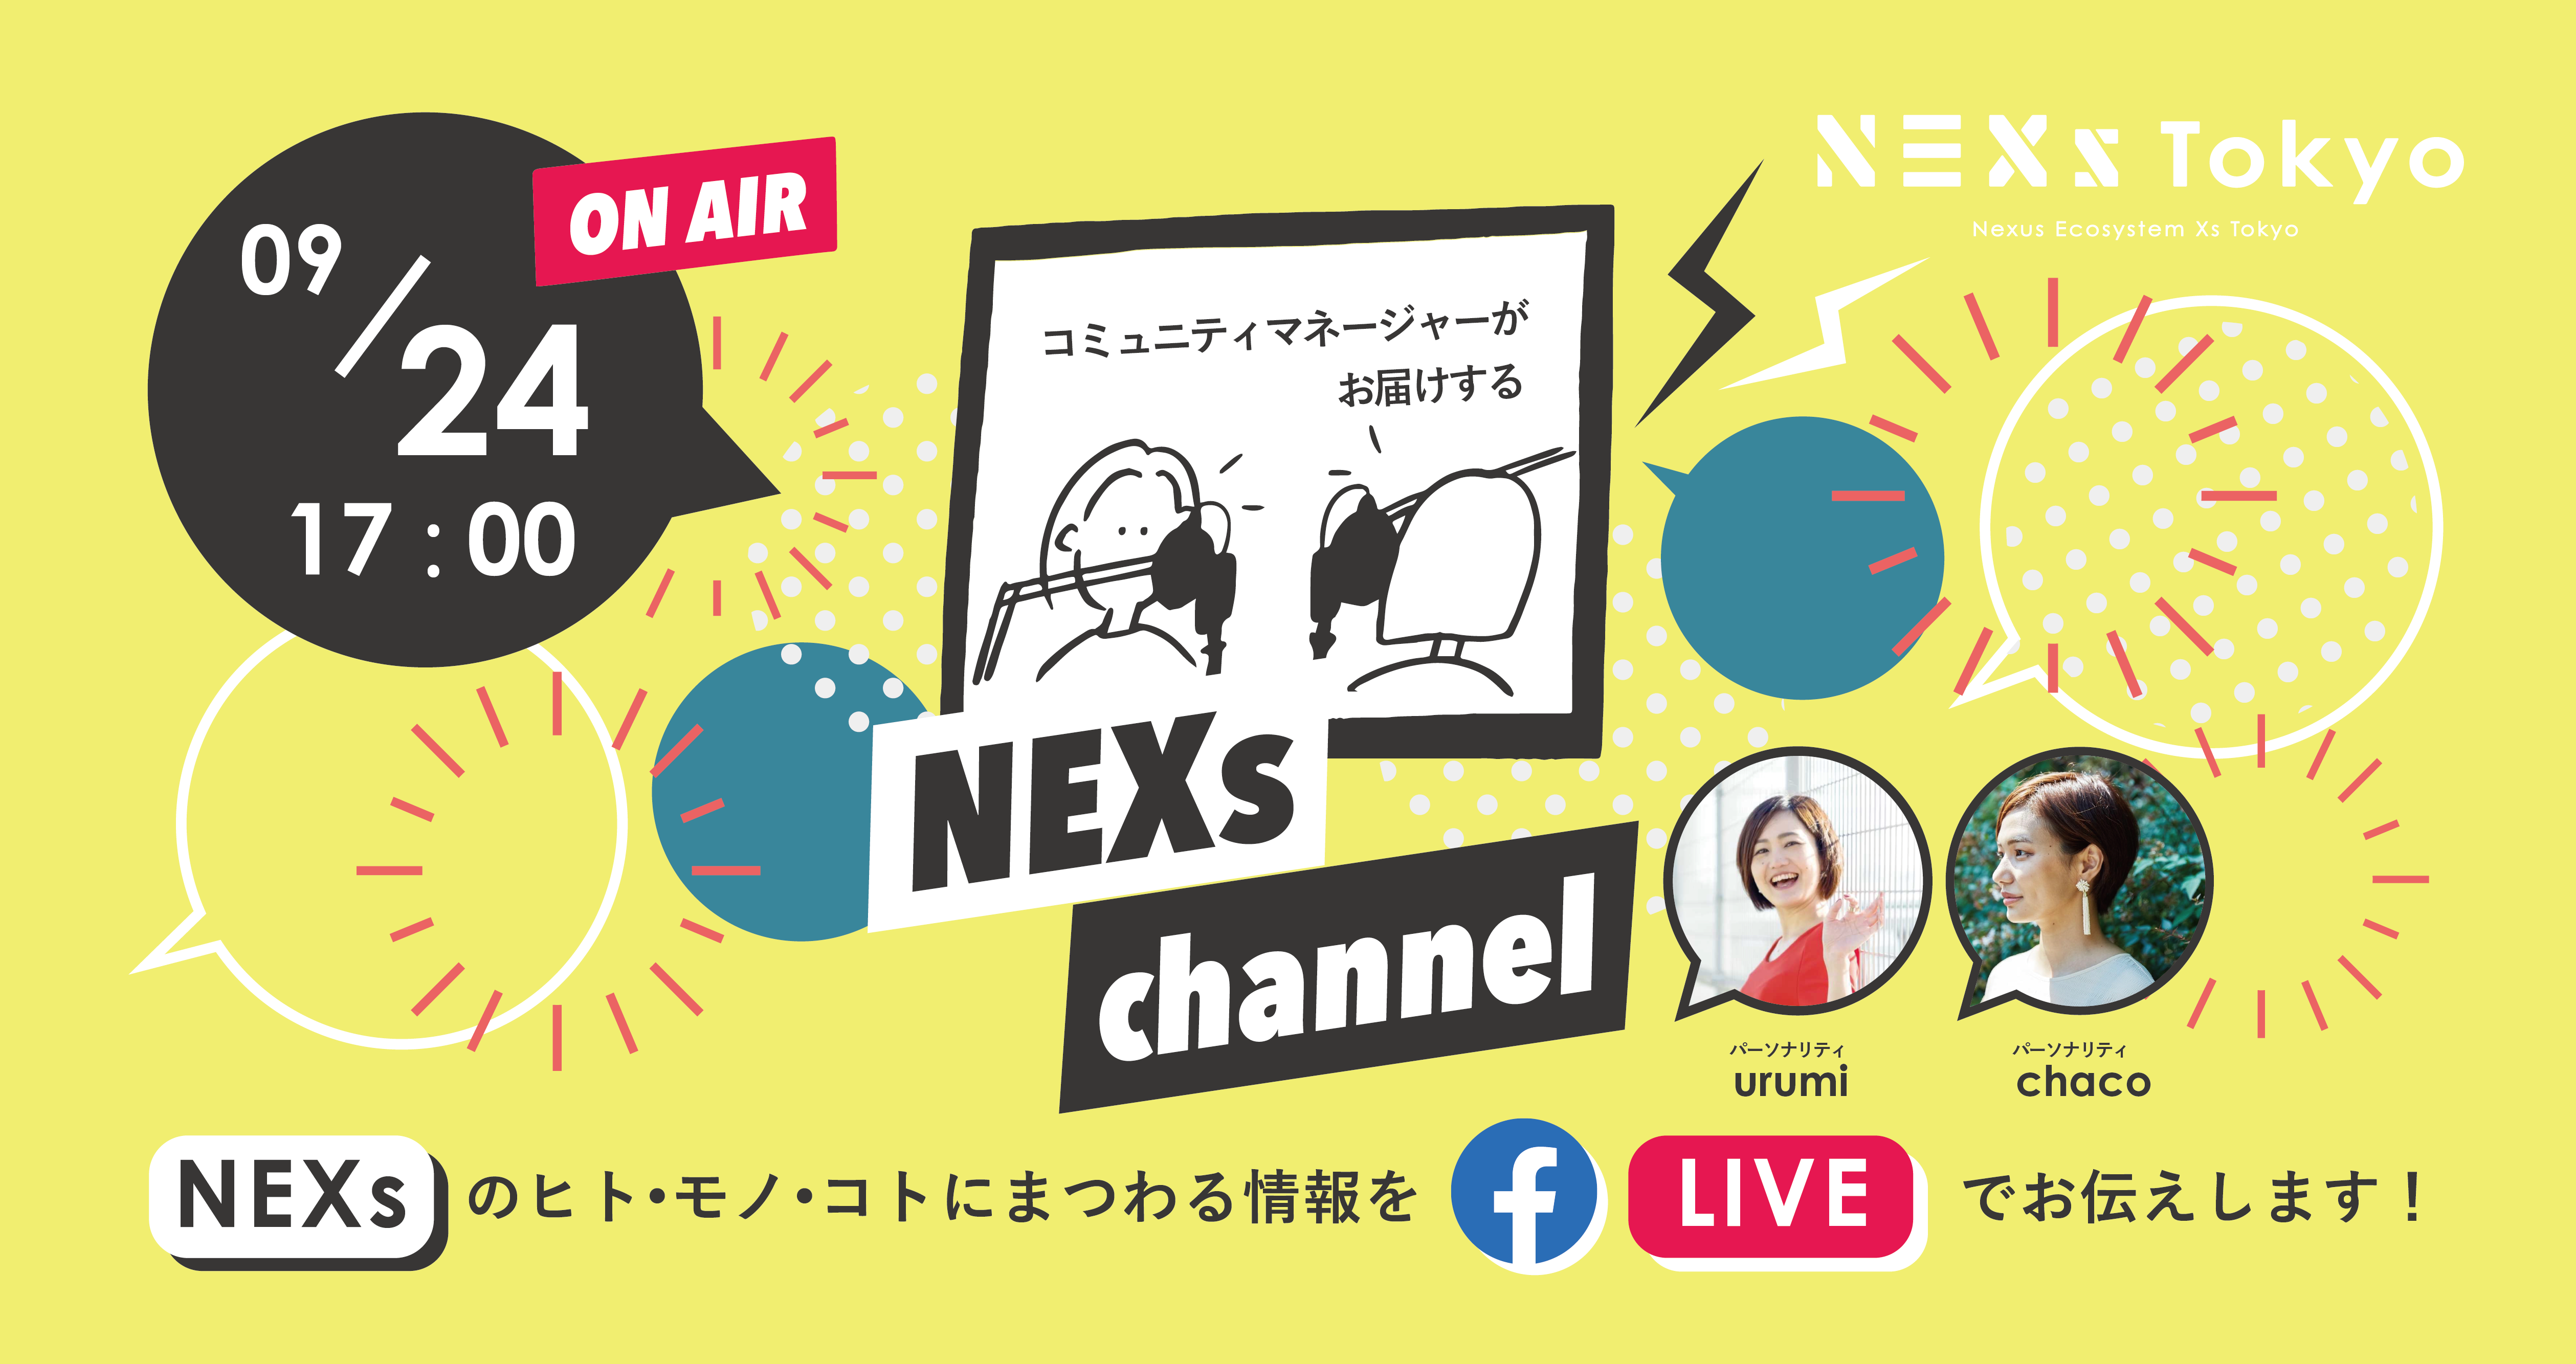 NEXs channel #9 -NEXs Tokyoのヒト・モノ・コトを特設ラジオブースから生放送でお届け！-